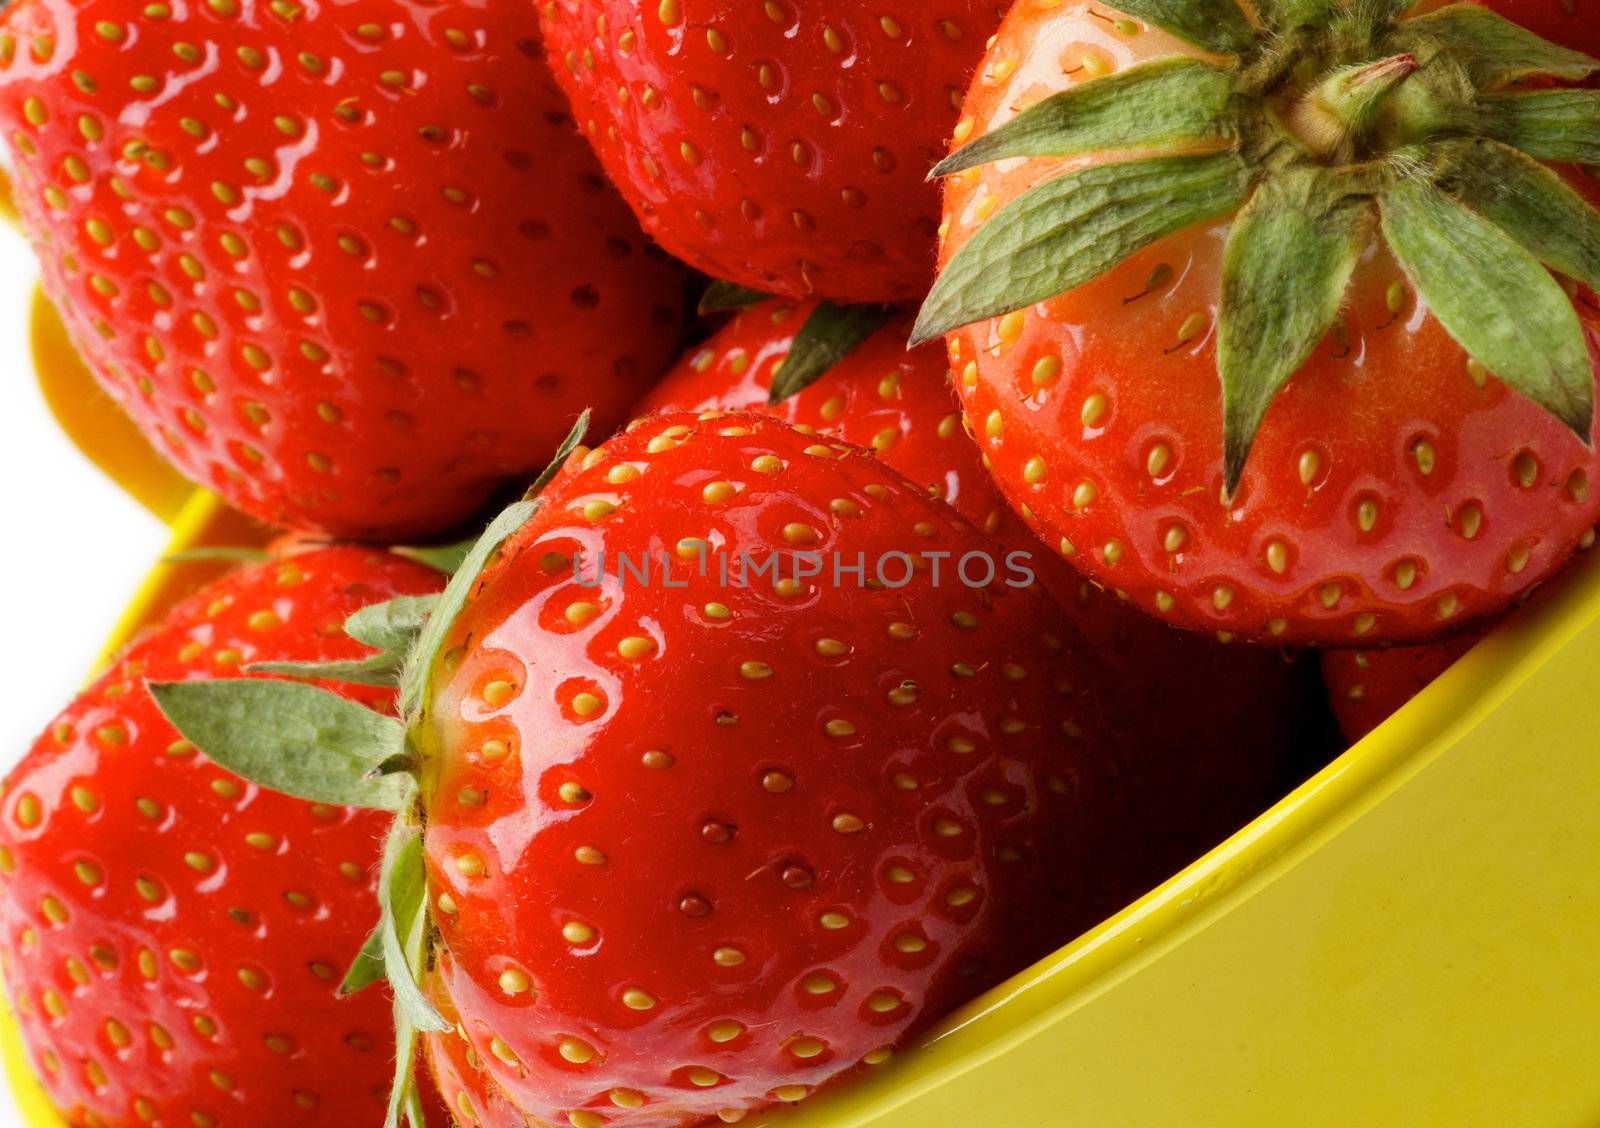 Strawberries by zhekos